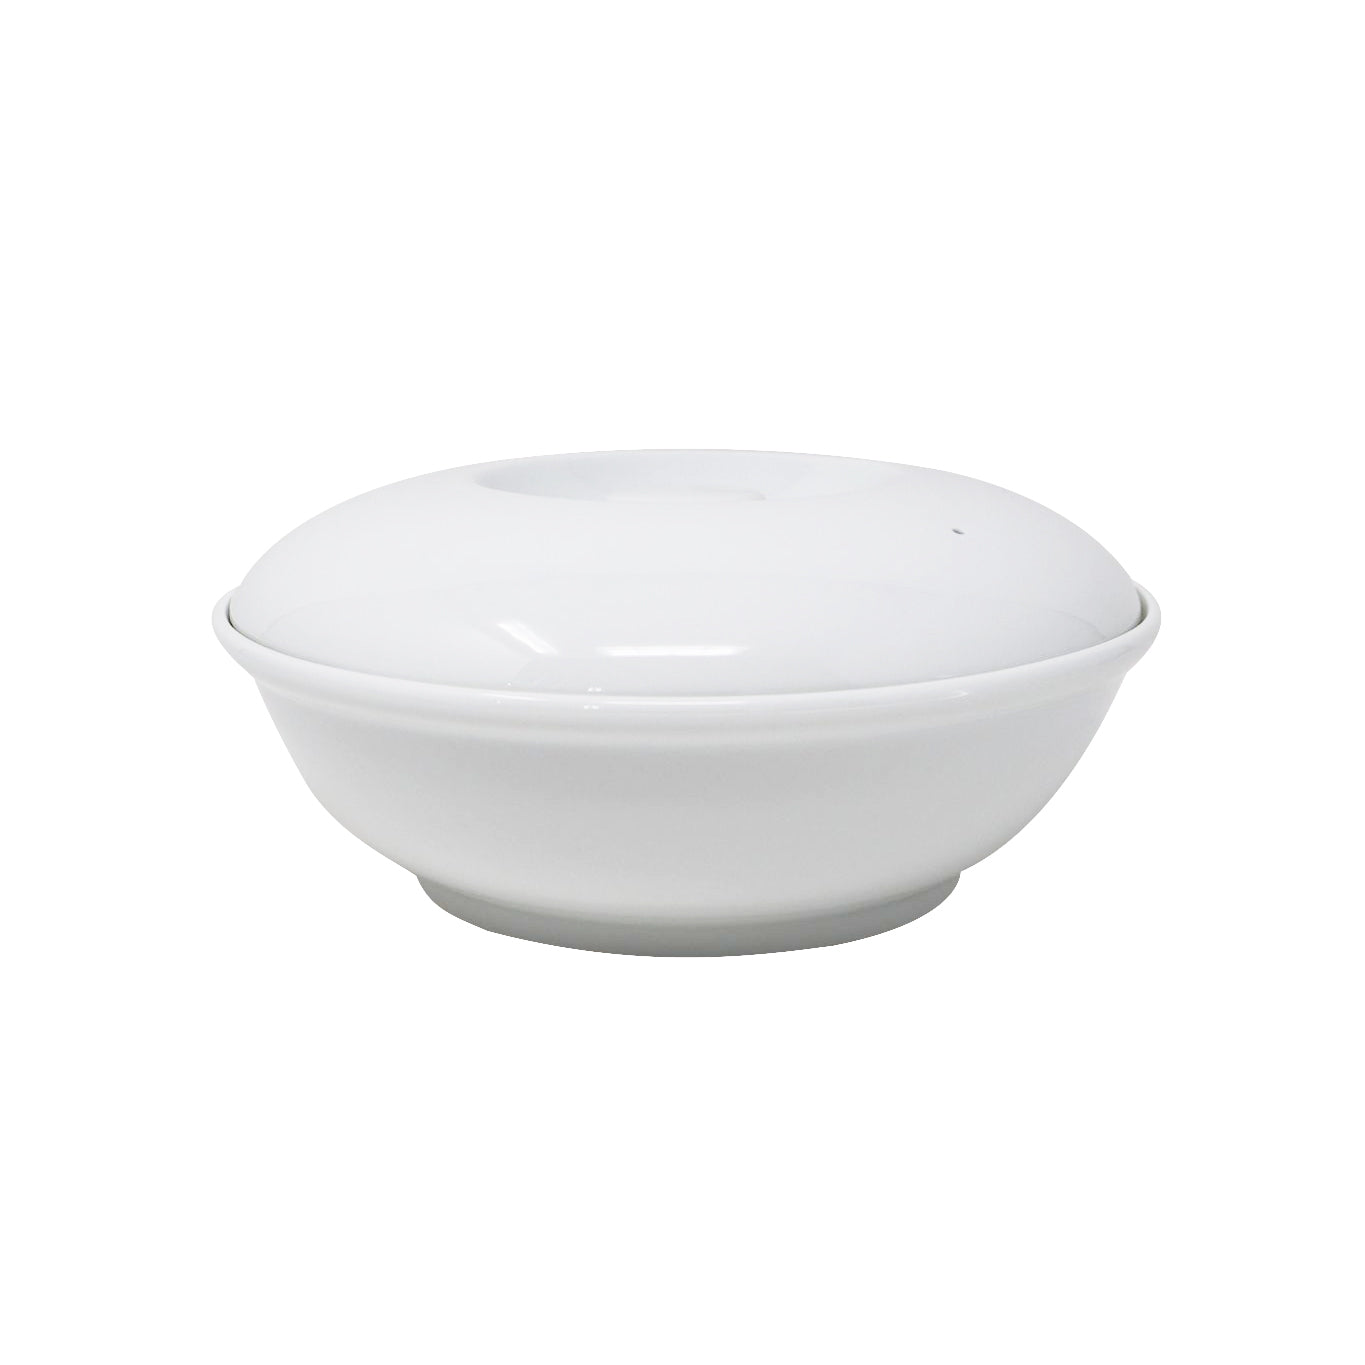 Noritake Lifestyle White Covered Serving Bowl 960ml